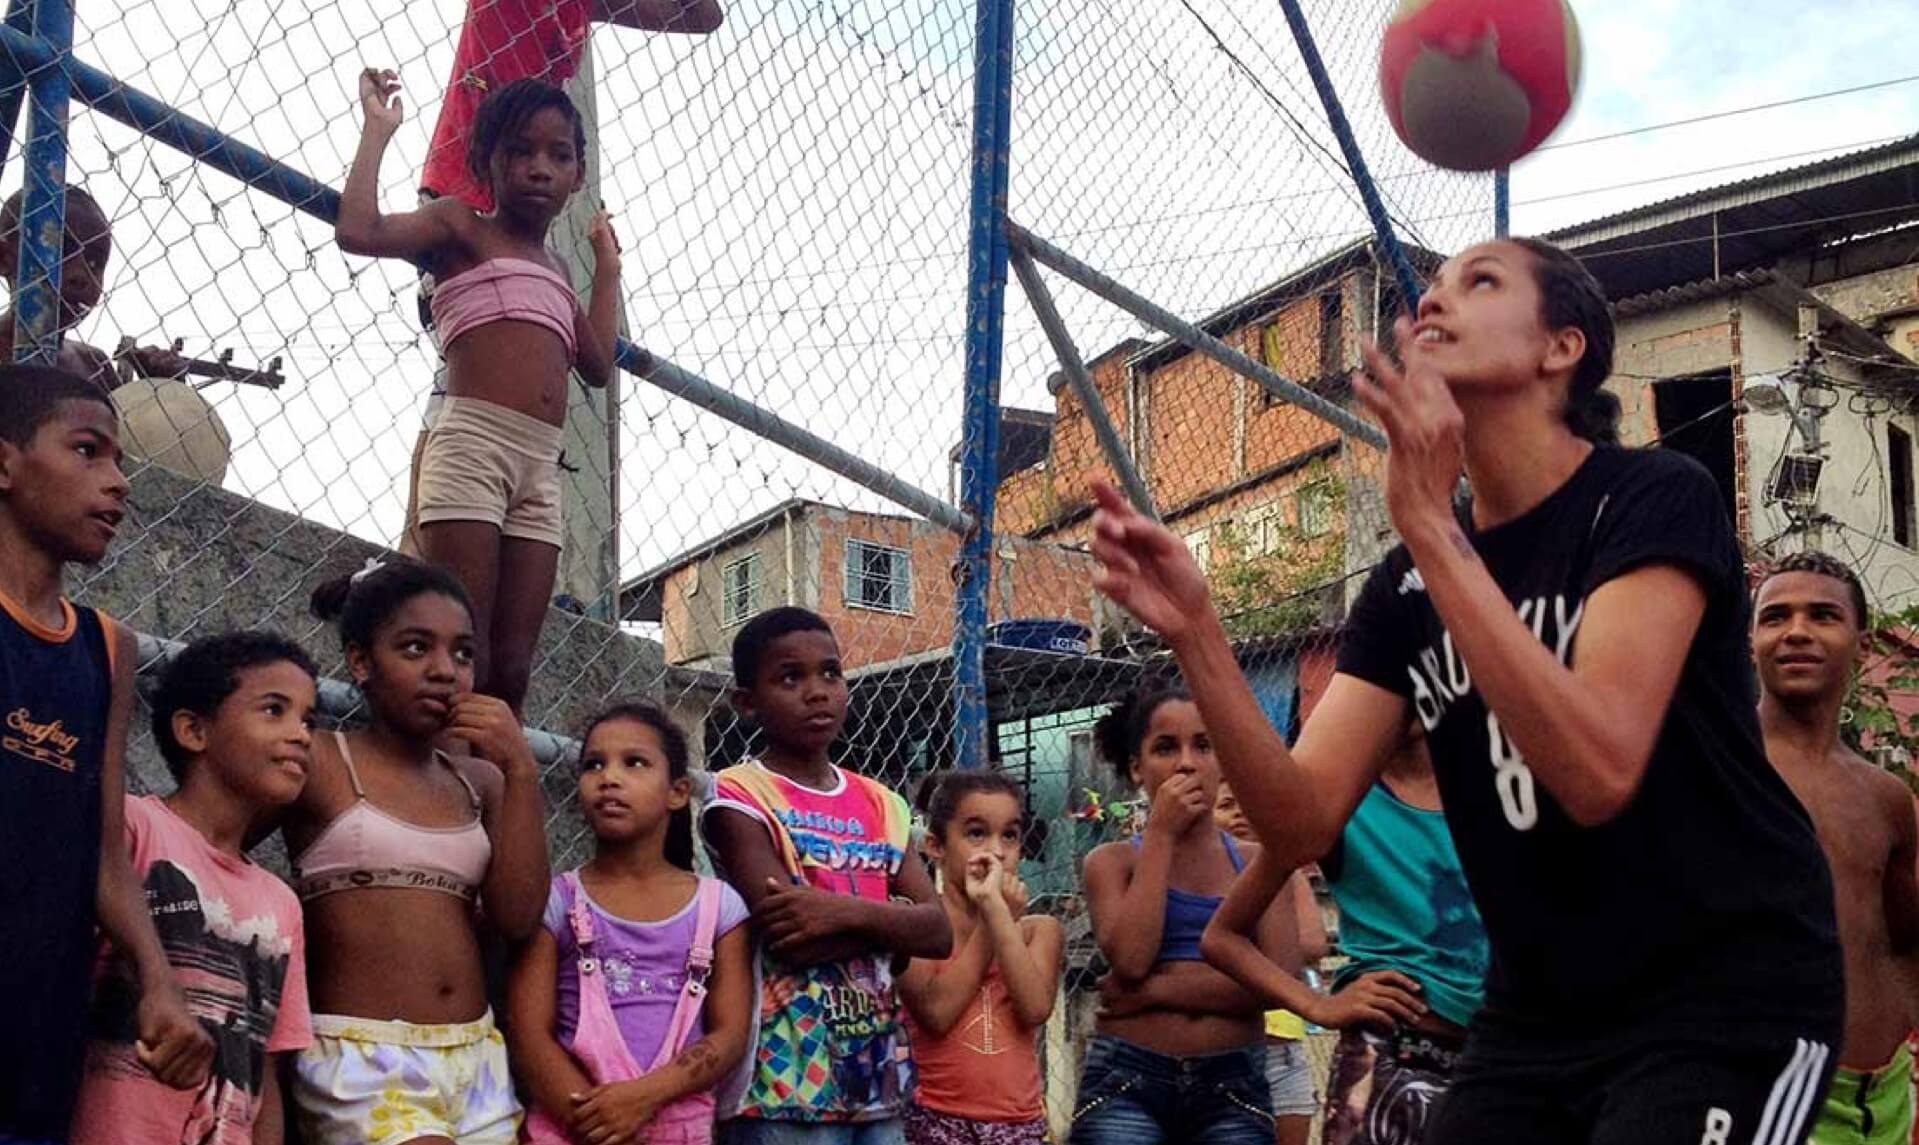 Favela Street Girls impression